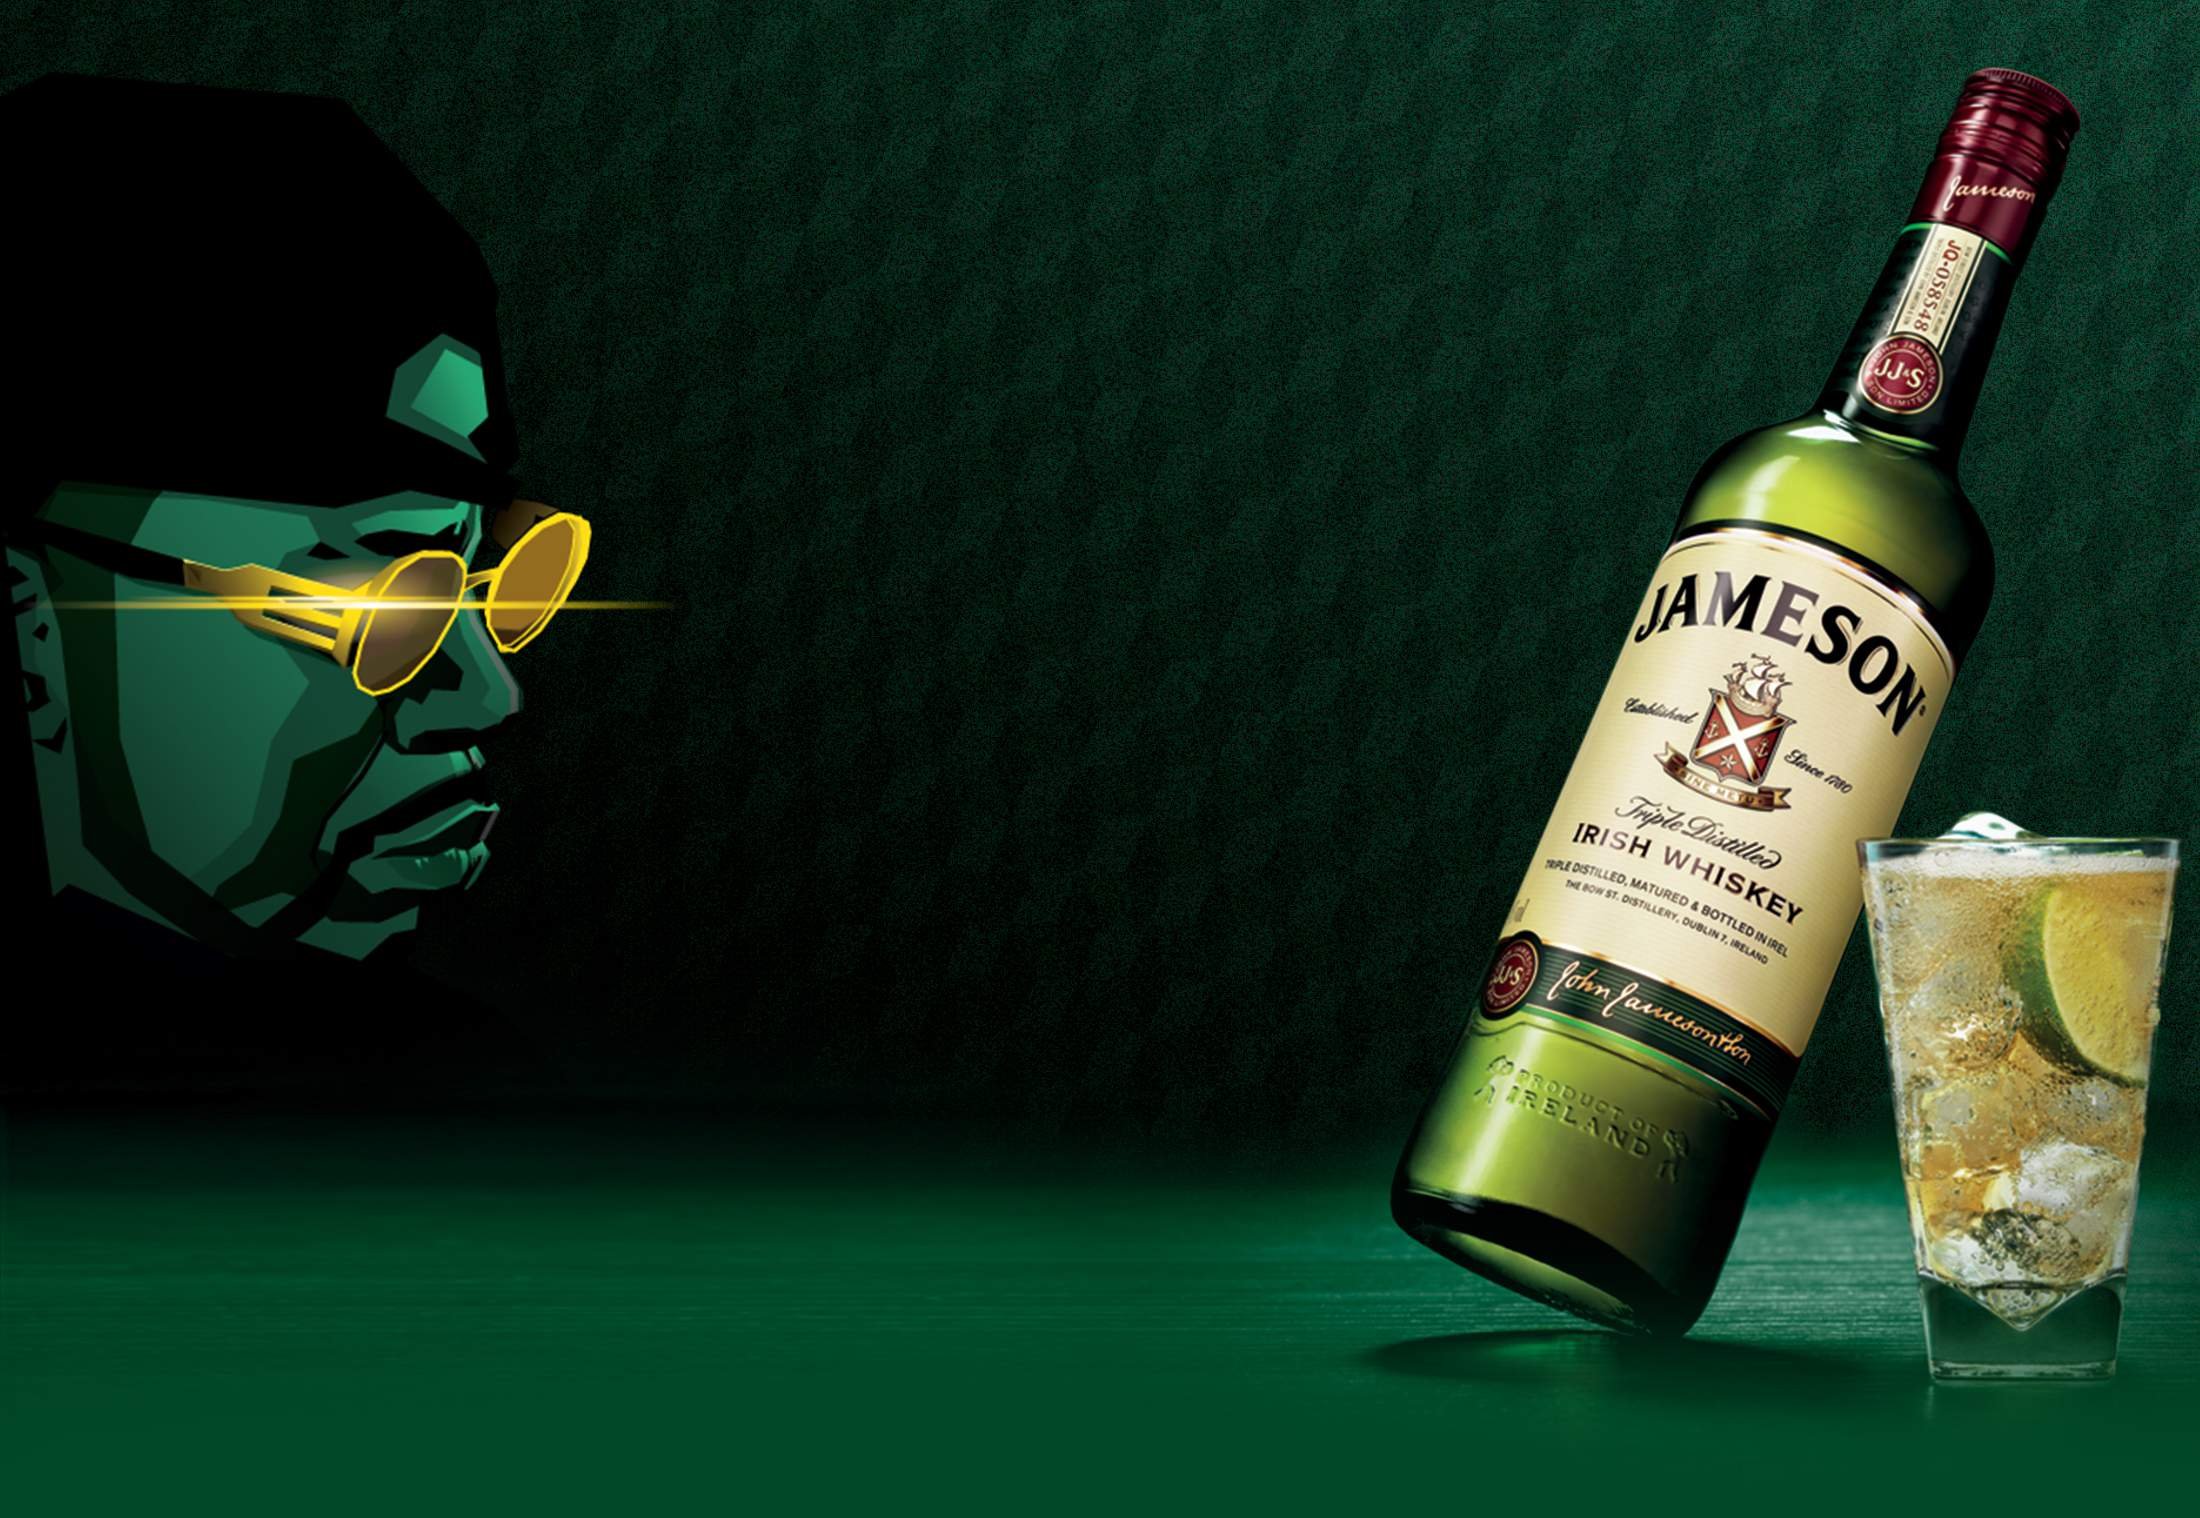 Ирландский виски Jameson